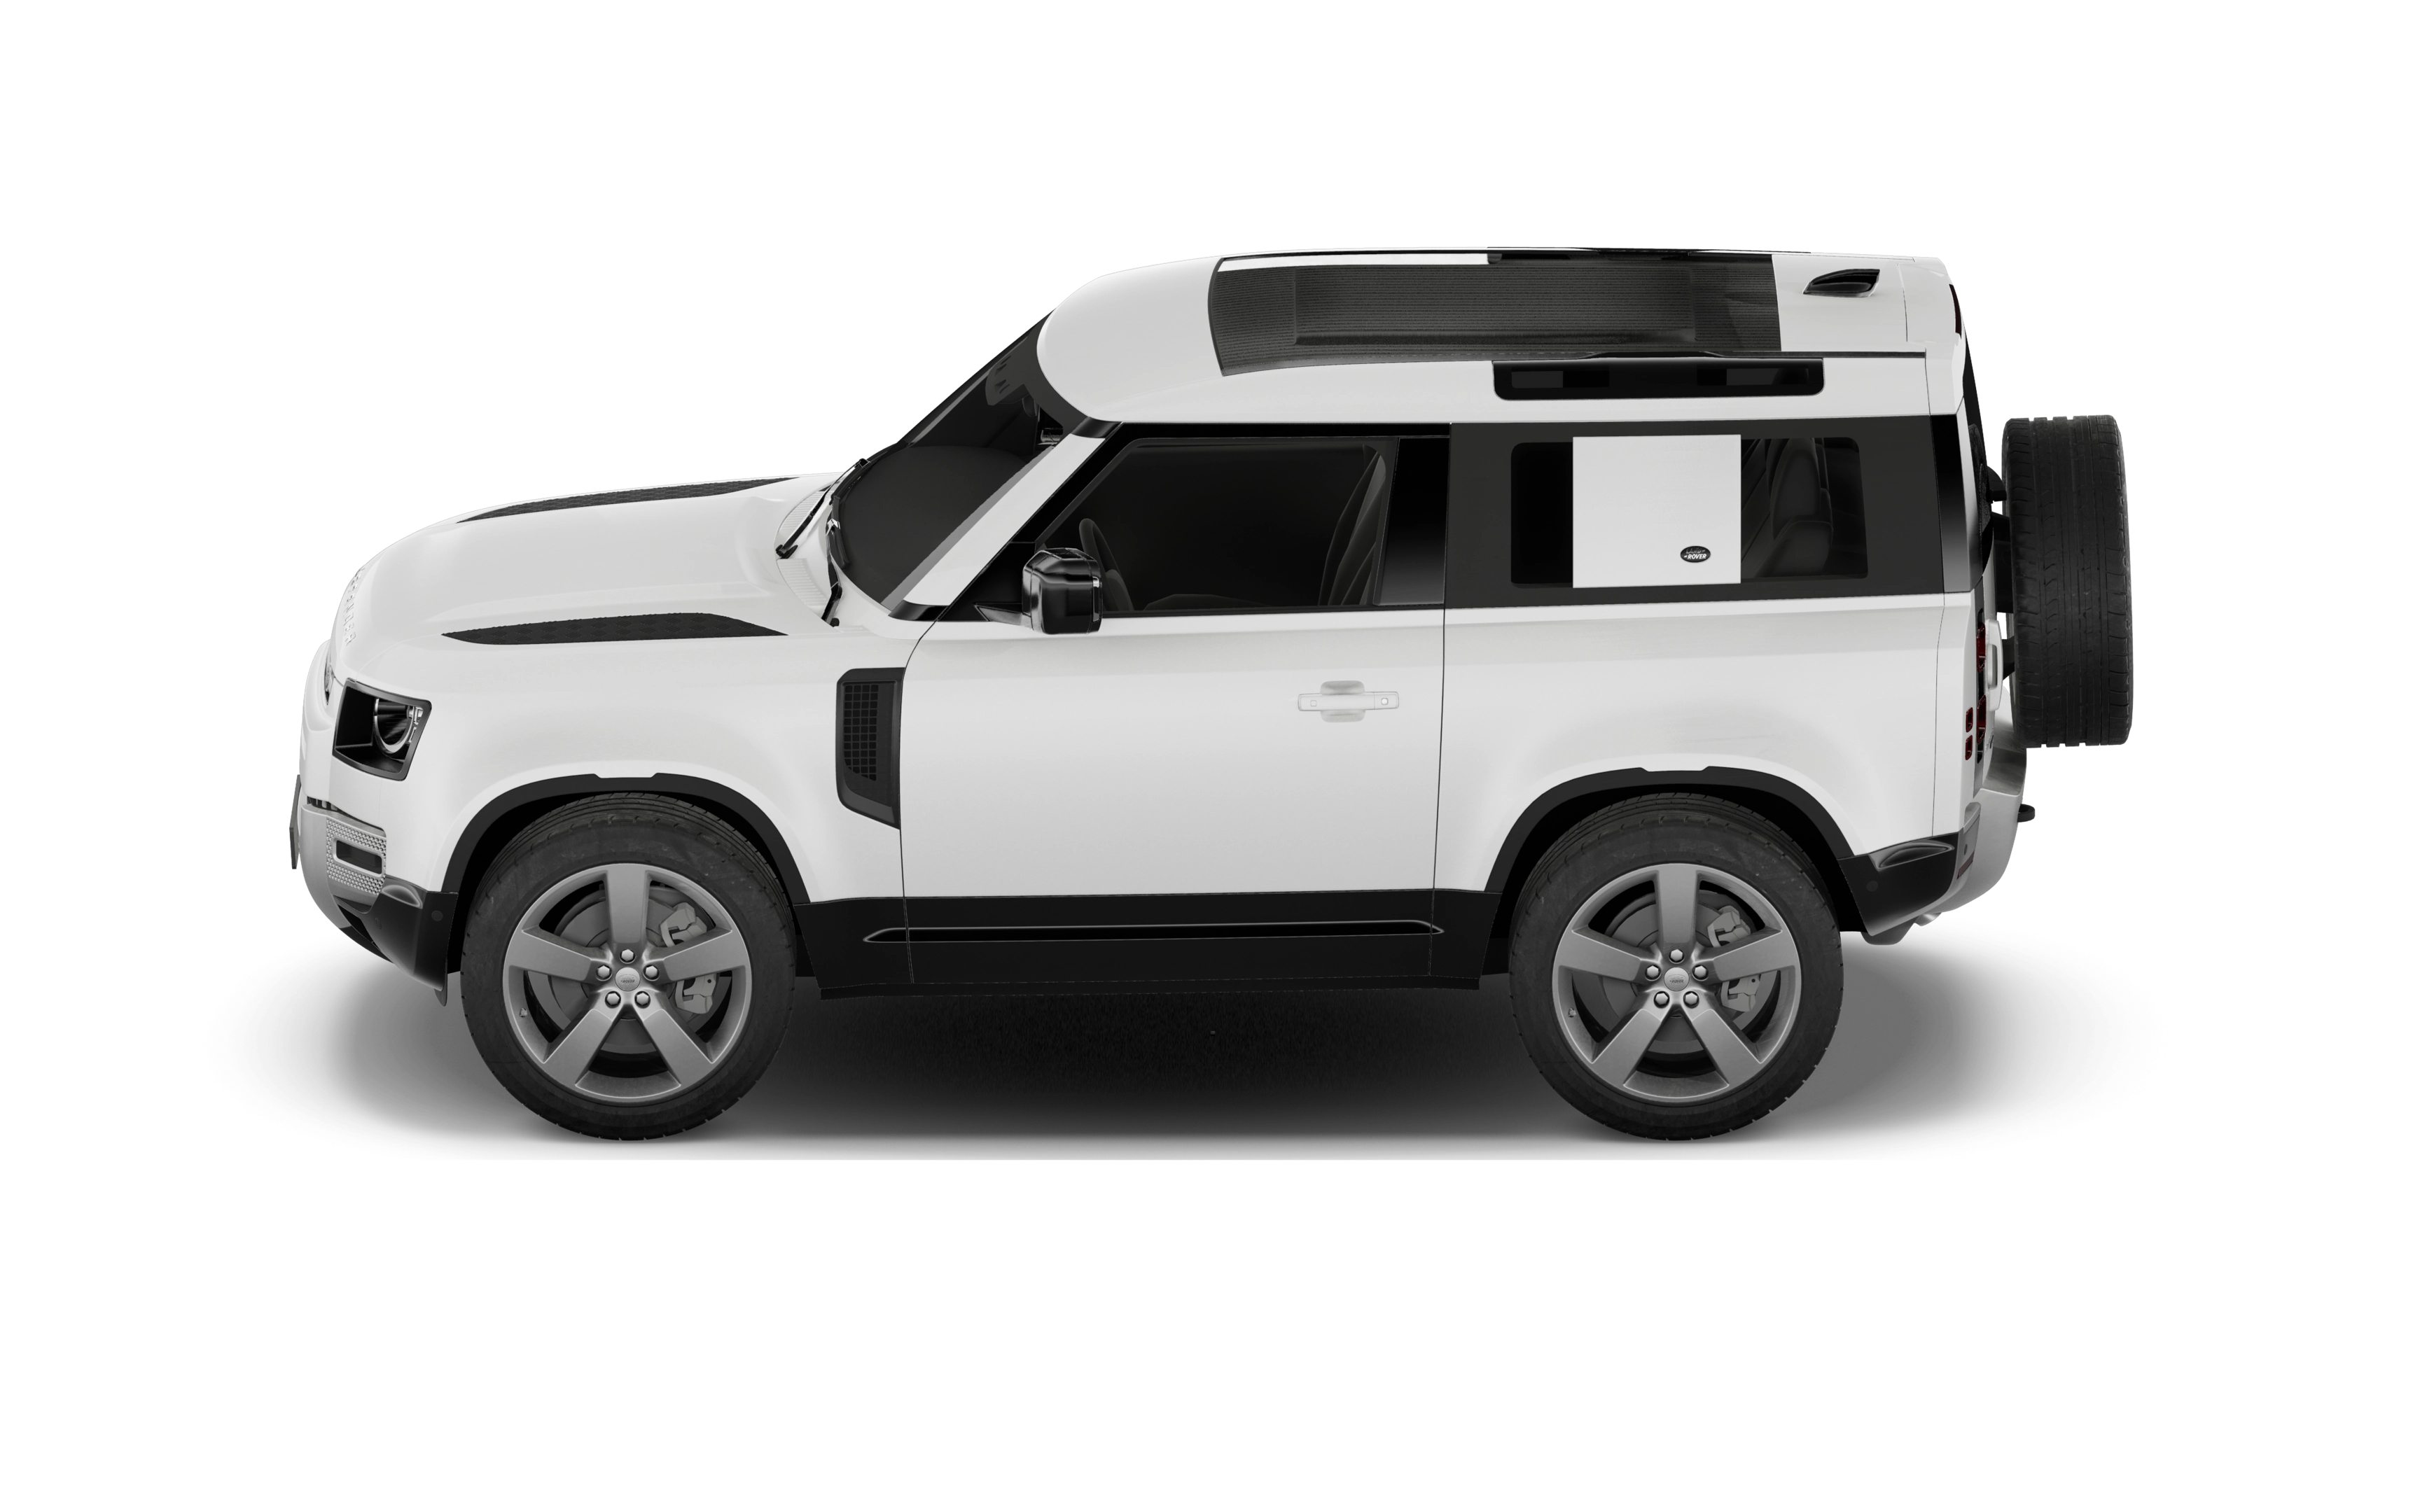 Land rover defender estate 3.0 p300 hse 130 5 doors auto [8 seat]